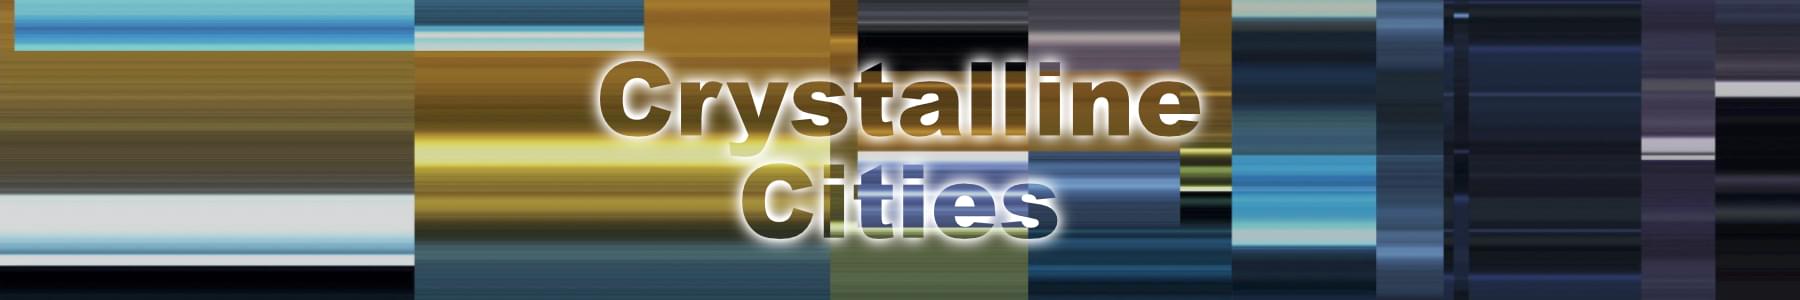 Crystalline Cities